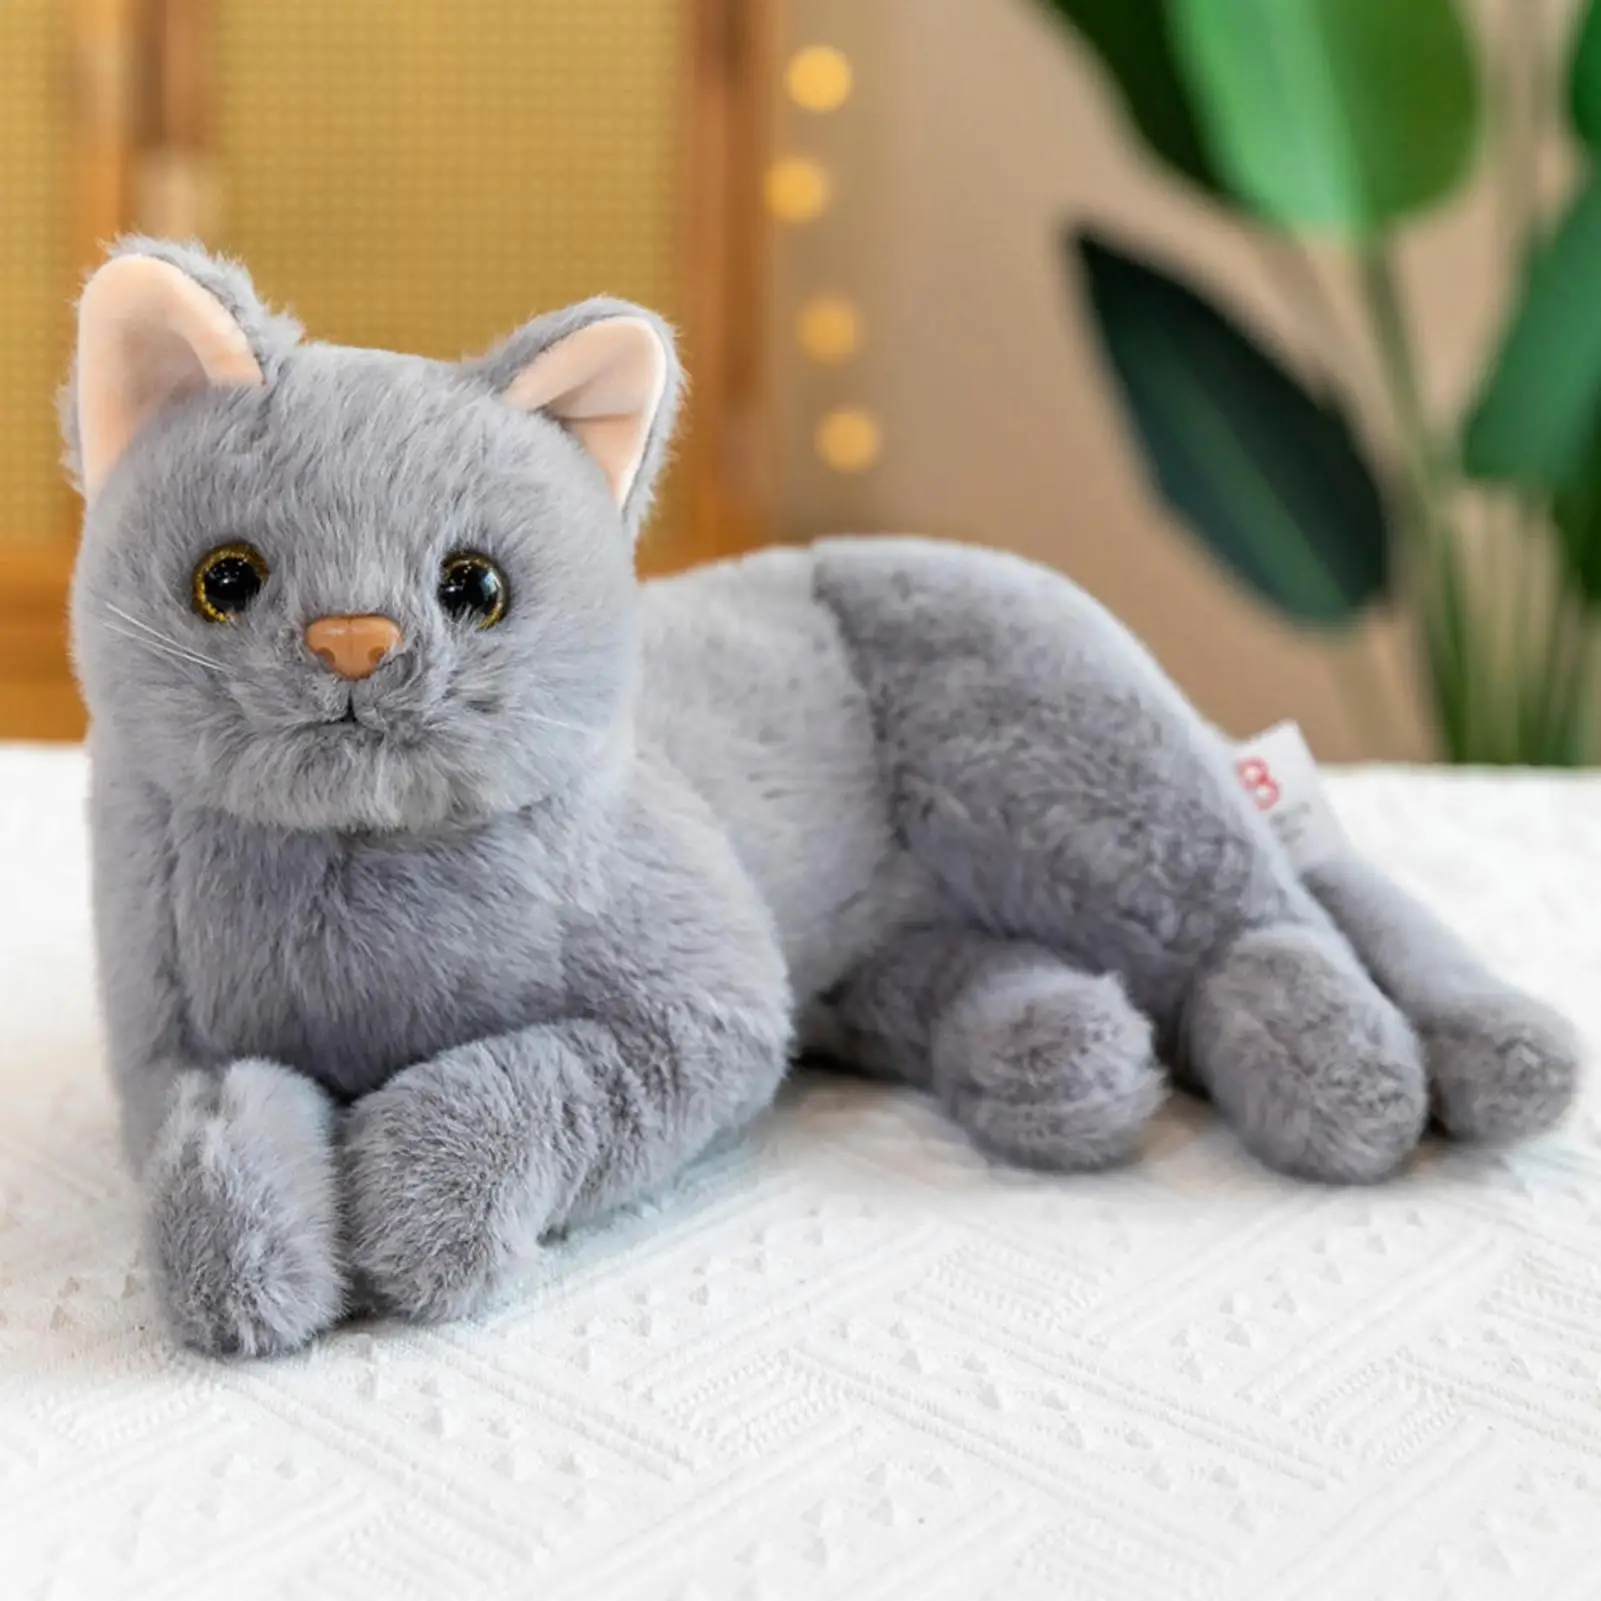 Cat Stuffed Animals | Realistic Cat Stuffed Animal | Kitten 12 inch Plush Cat Stuffed Doll Soft Thro